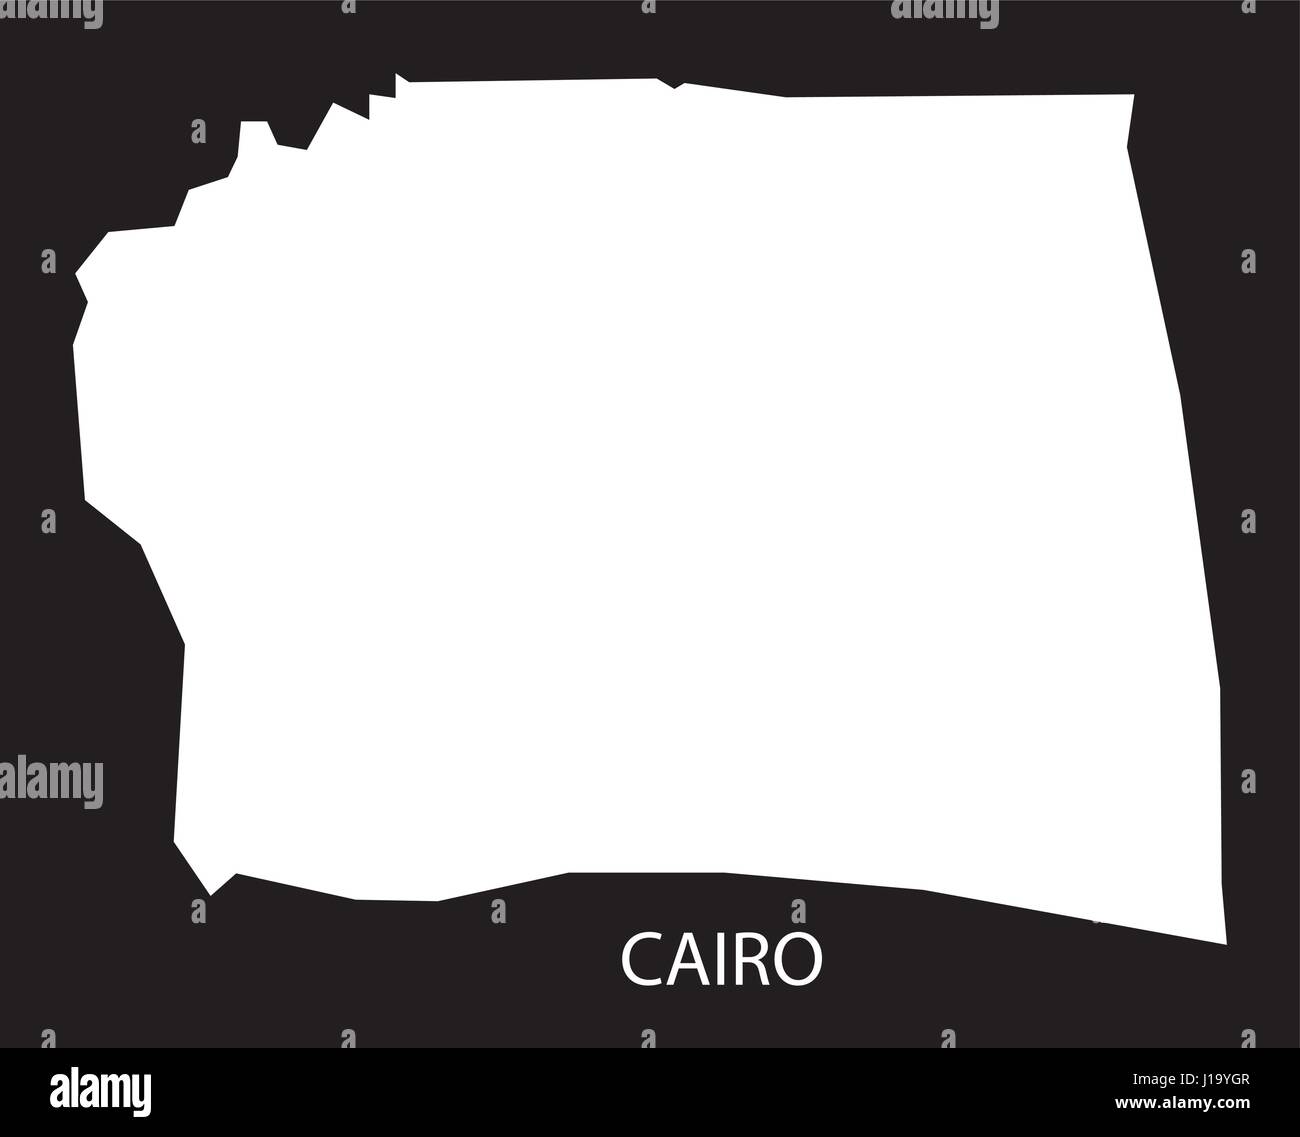 Cairo Ägypten Karte schwarz invertiert Silhouette Abbildung Stock Vektor